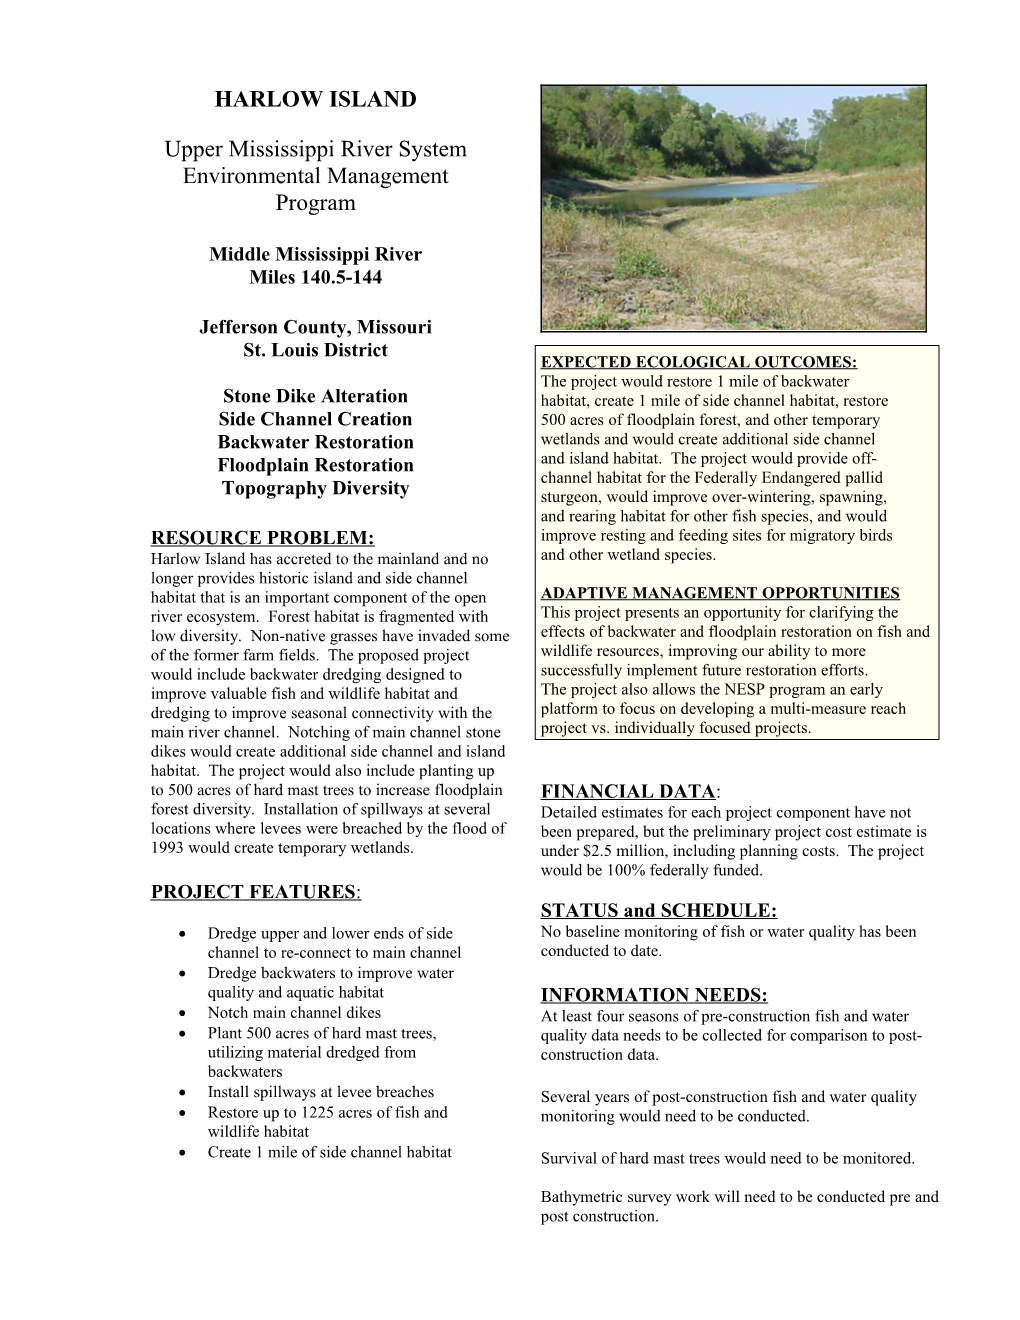 Upper Mississippi River System Environmental Management Program